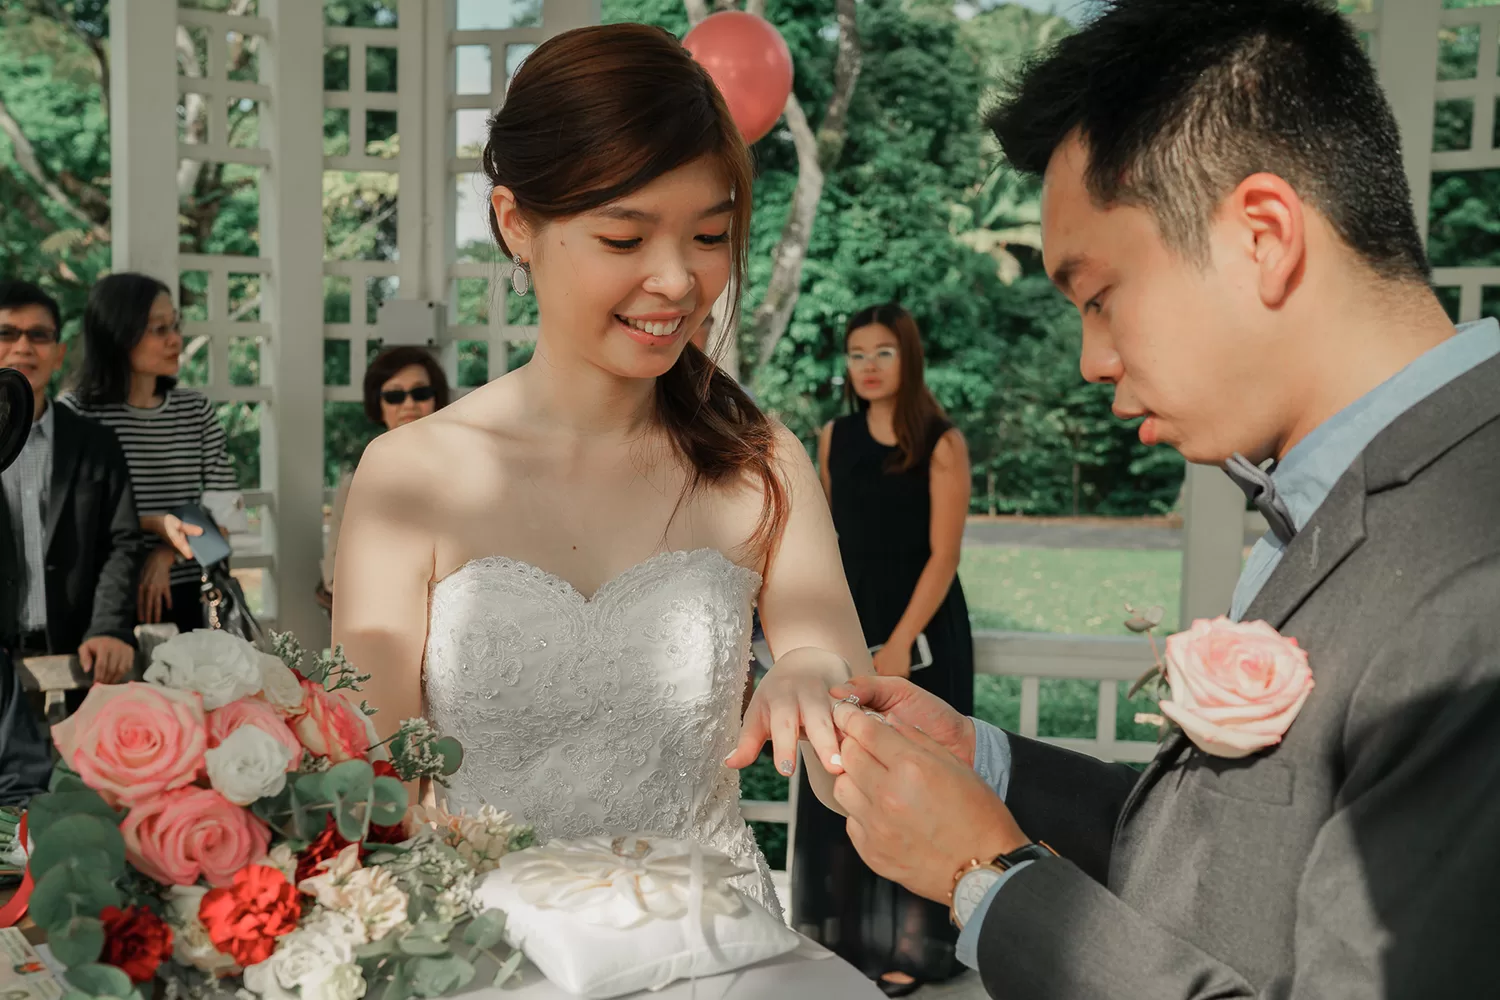 Actual day wedding at Bandstand Botanic Gardens, Singapore.